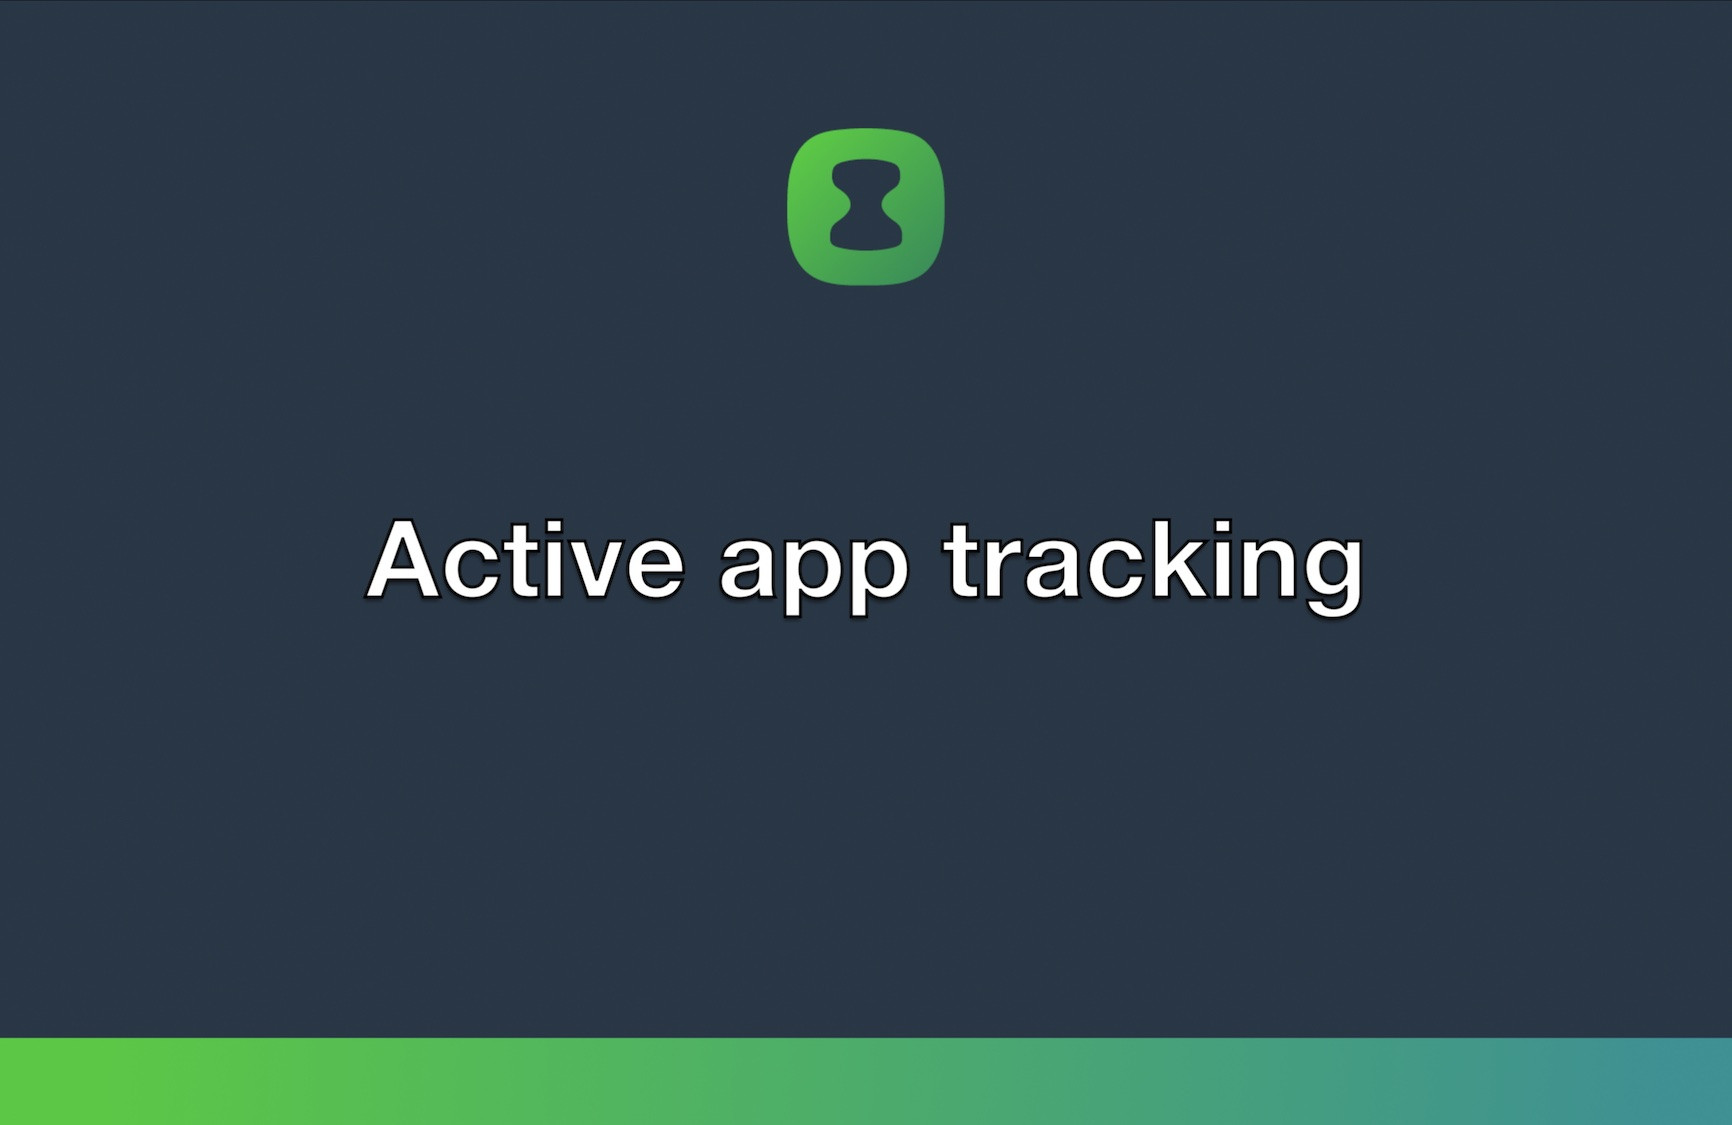 Active-app-tracking-hero.jpg